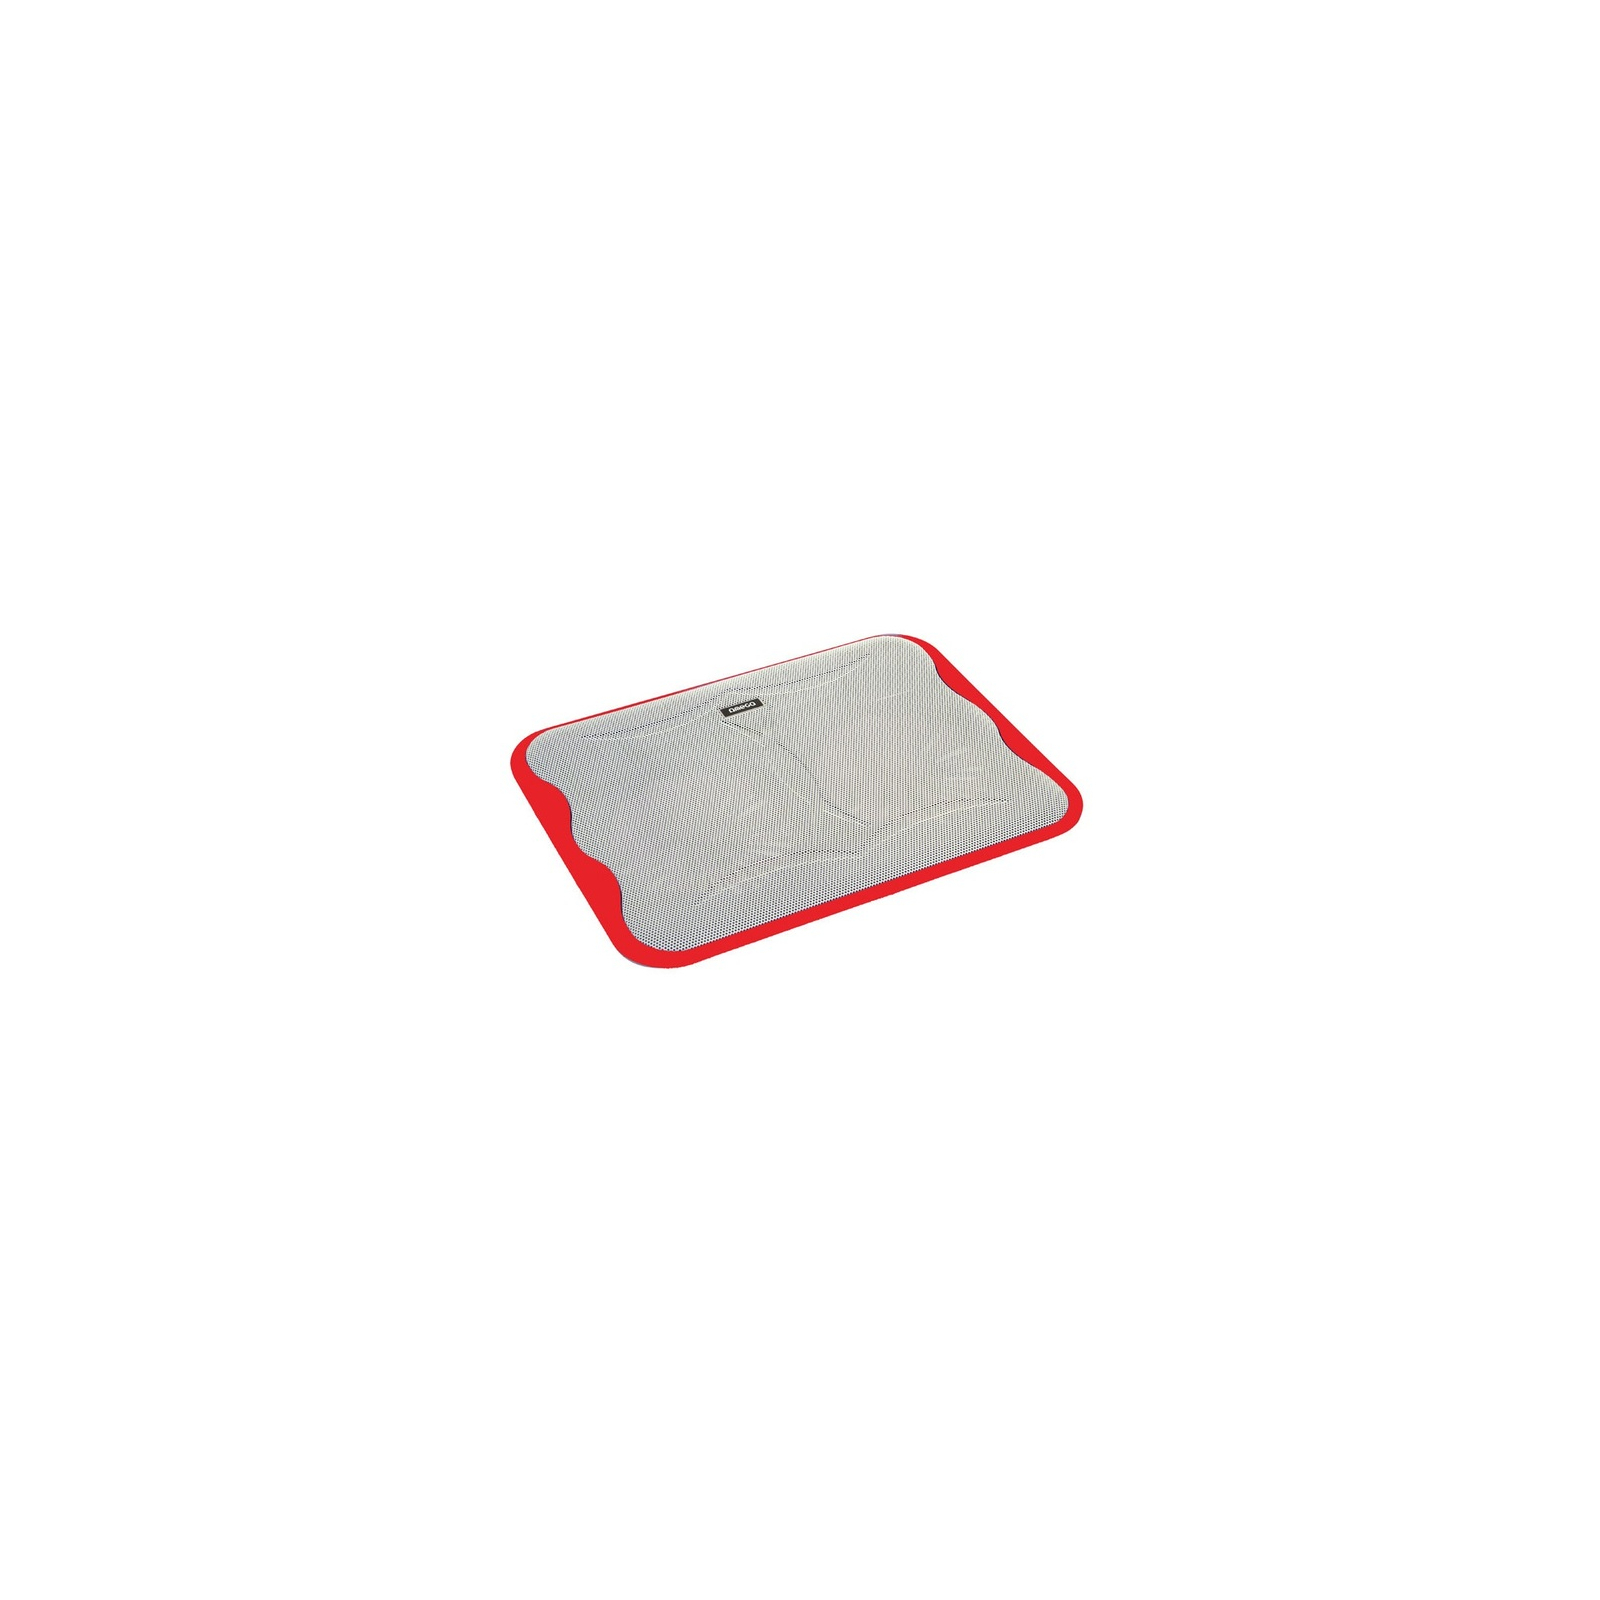 Підставка до ноутбука Omega Ice Cube Laptop Cooler Pad Red (OMNCPCBR)